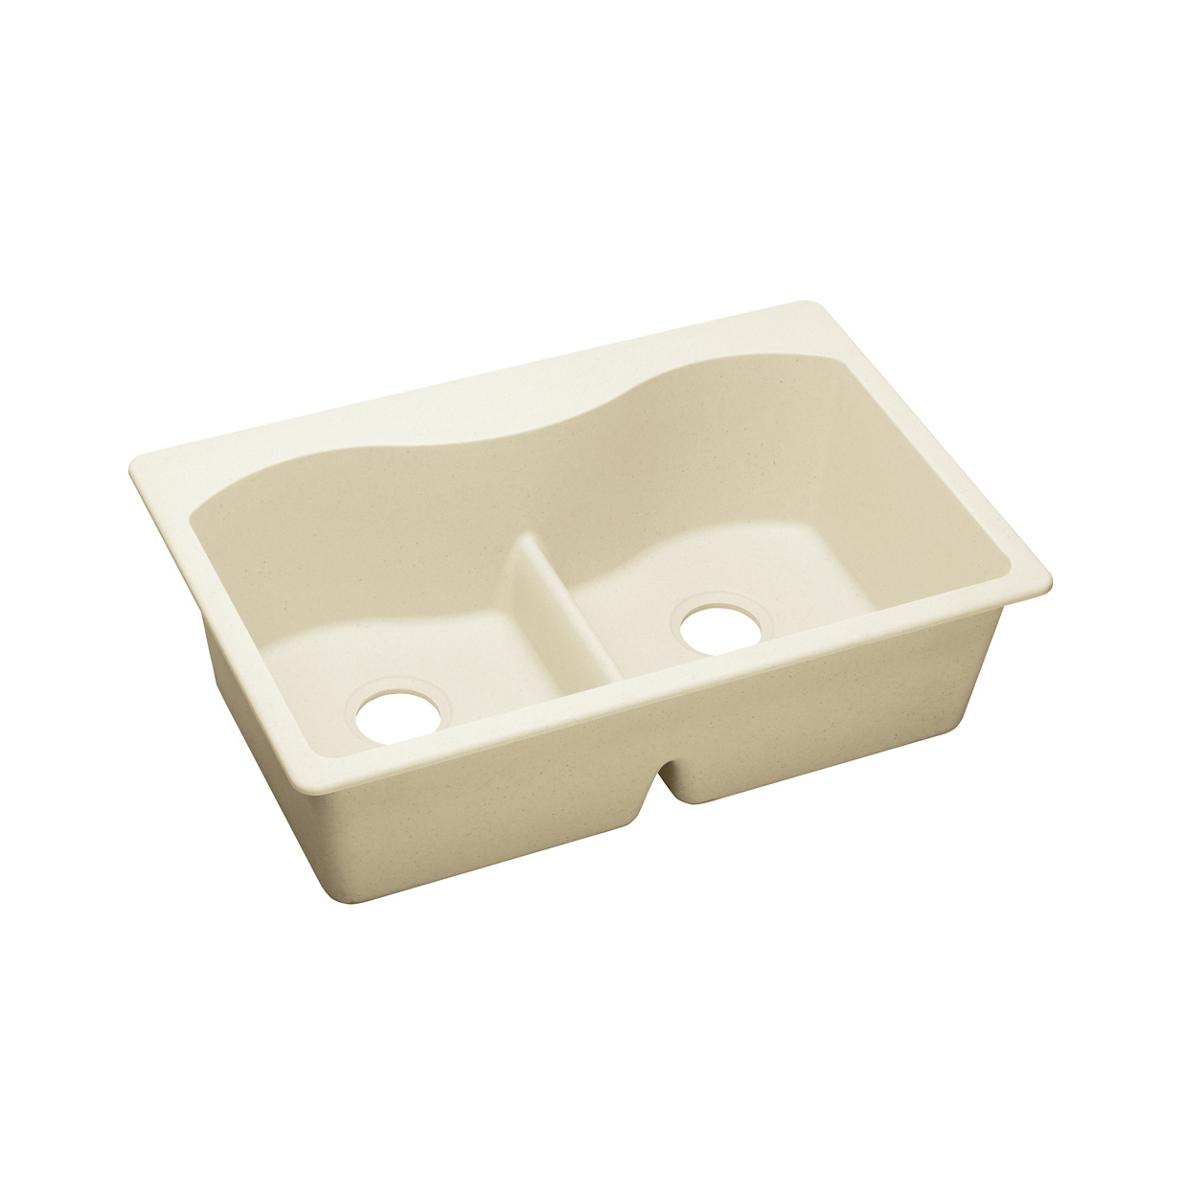 Elkay Quartz Luxe 33" x 22" x 9-1/2", Equal Double Bowl Drop-in Sink with Aqua Divide, Parchment